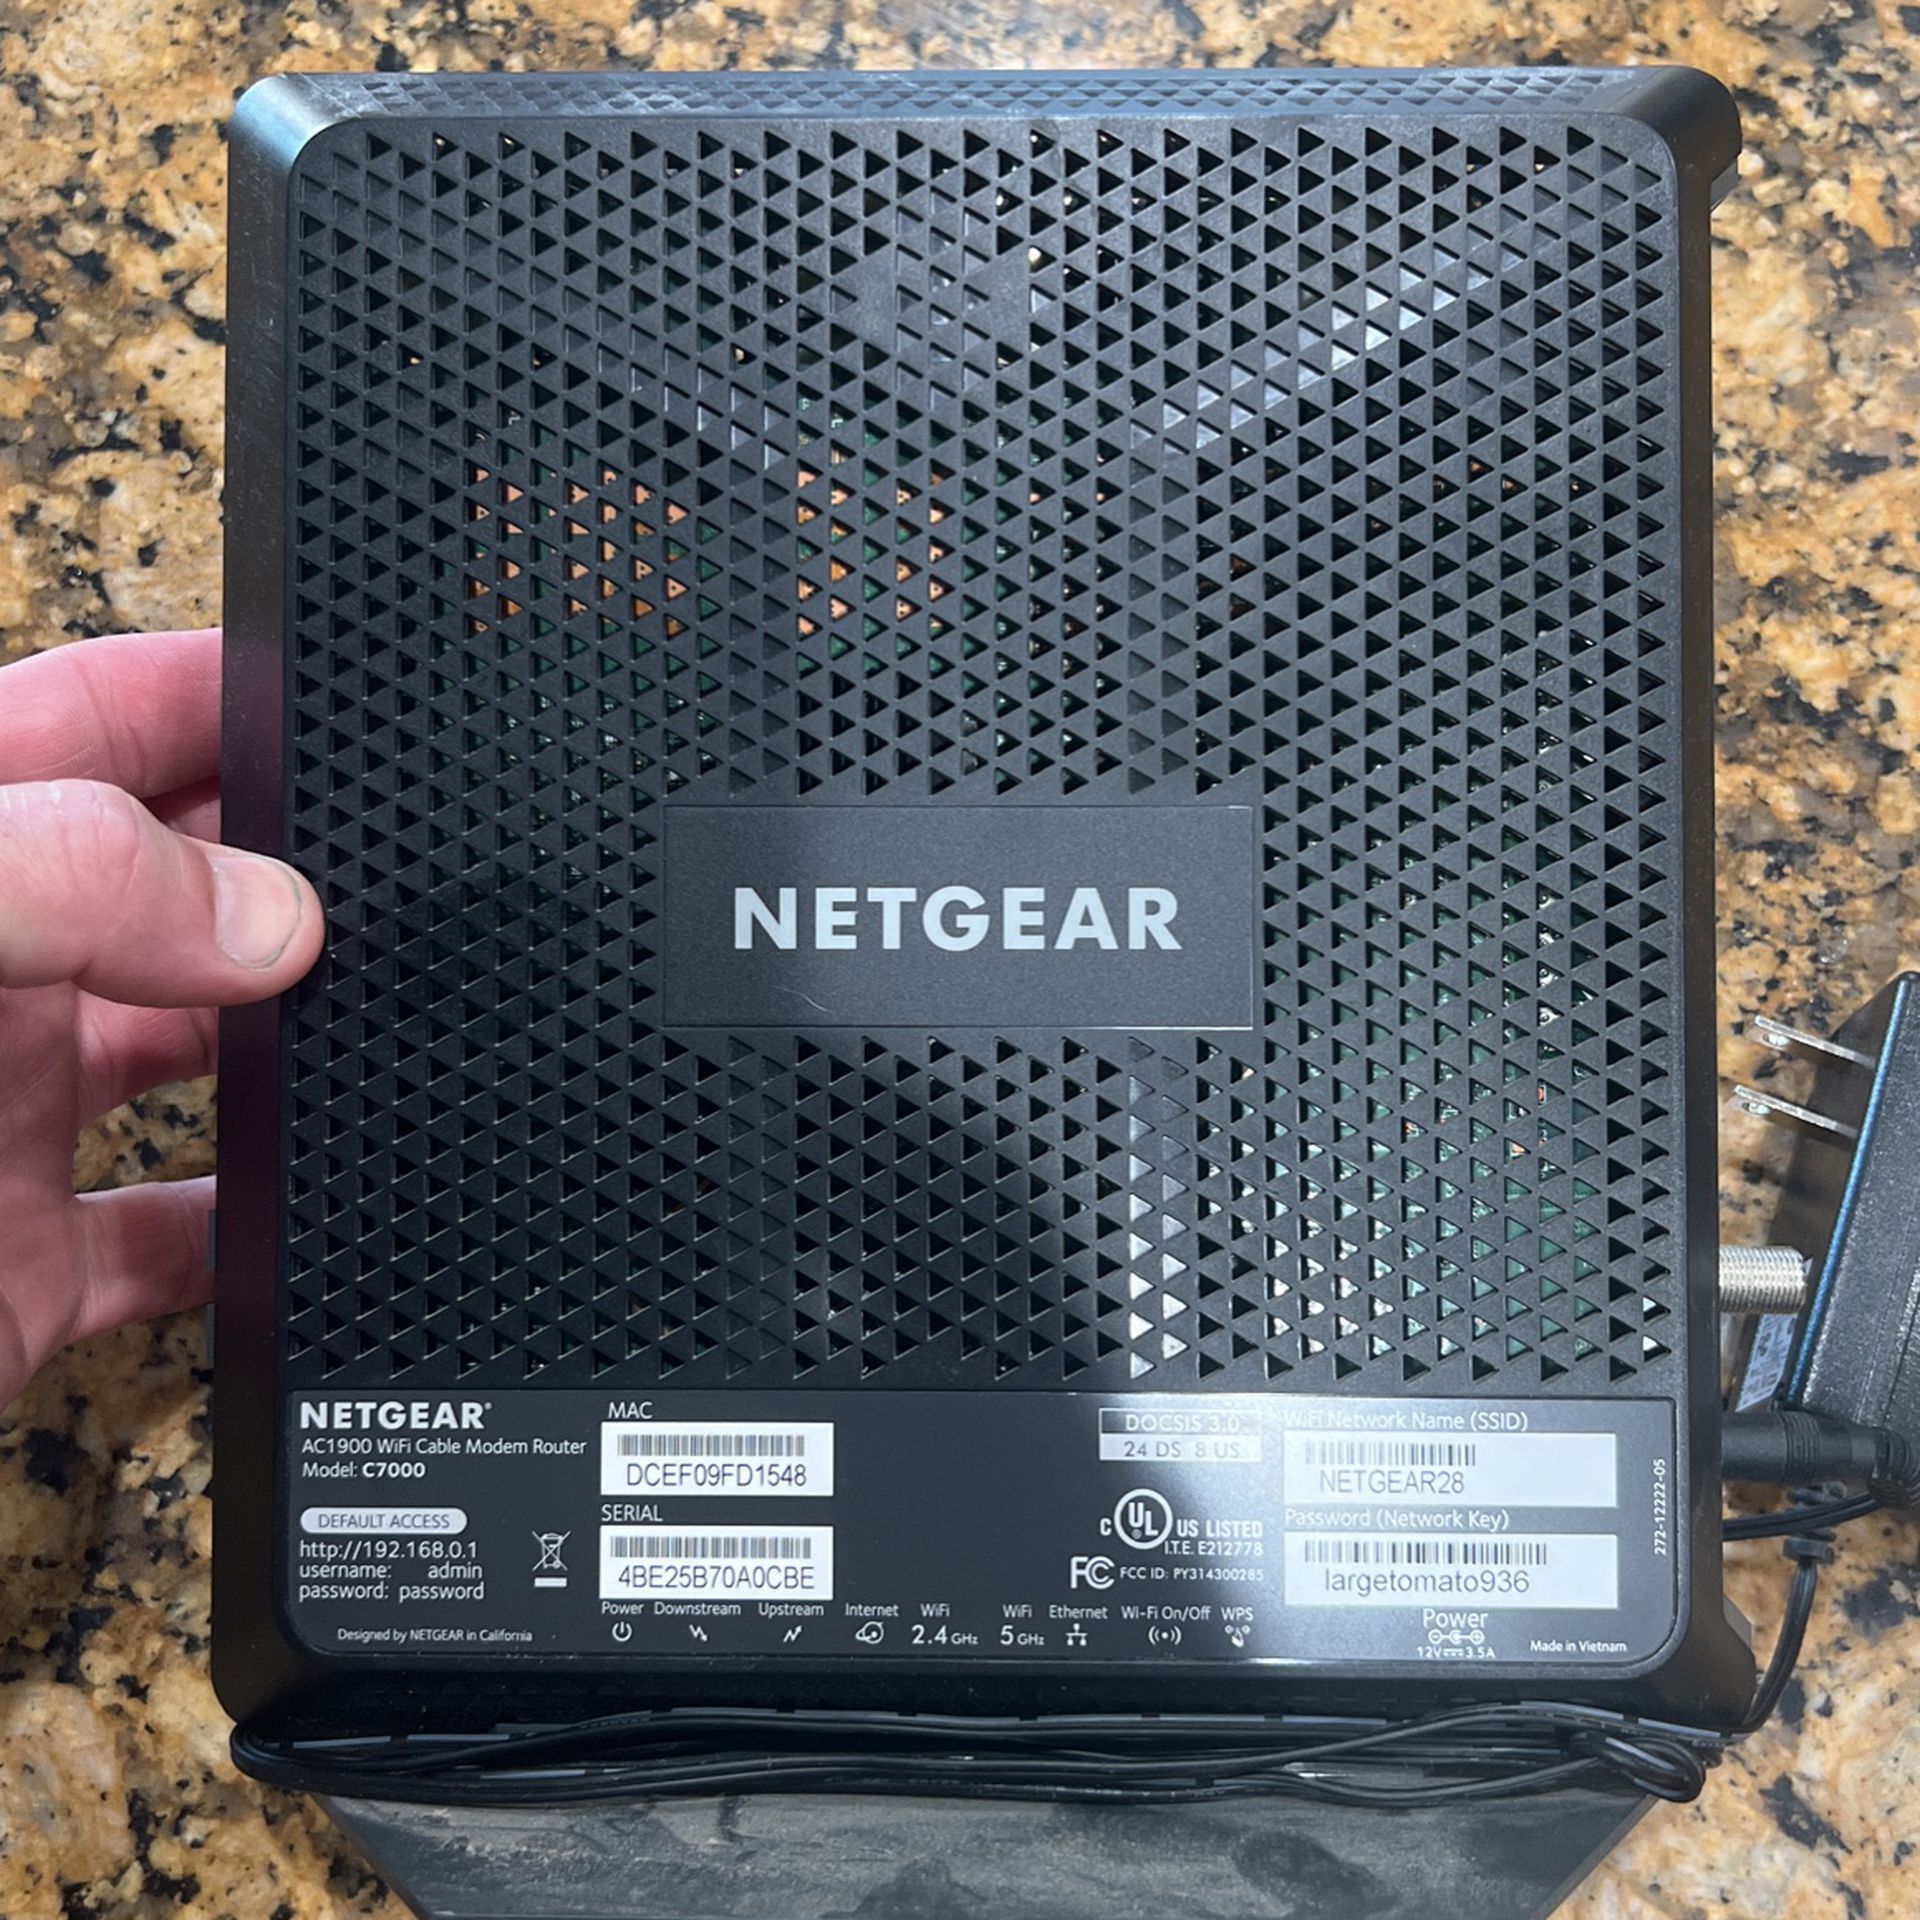 Netgear Ac1900 Wi-Fi Cable Modem Router Model C7000